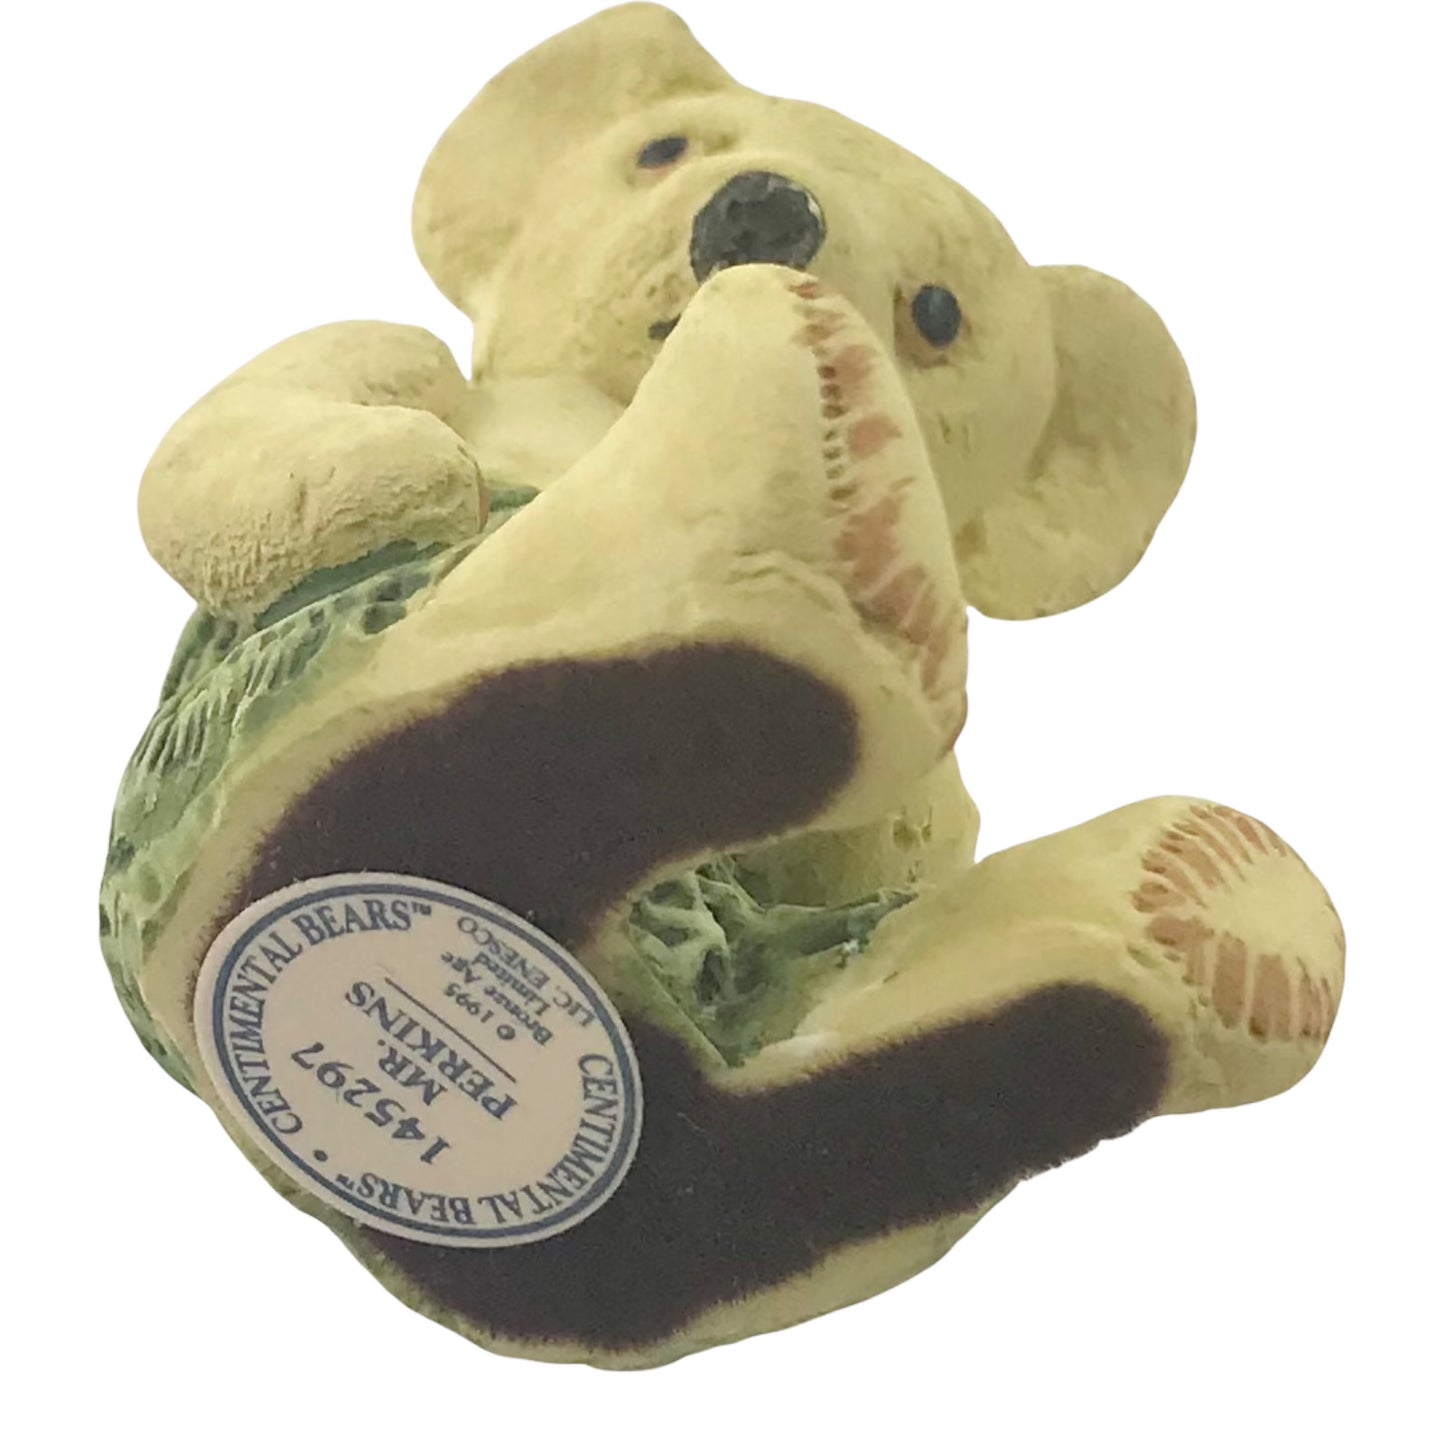 Mr. Perkins Bear Wearing Green Pants 1.5 Inch Figurine 1995 Centimental Bears